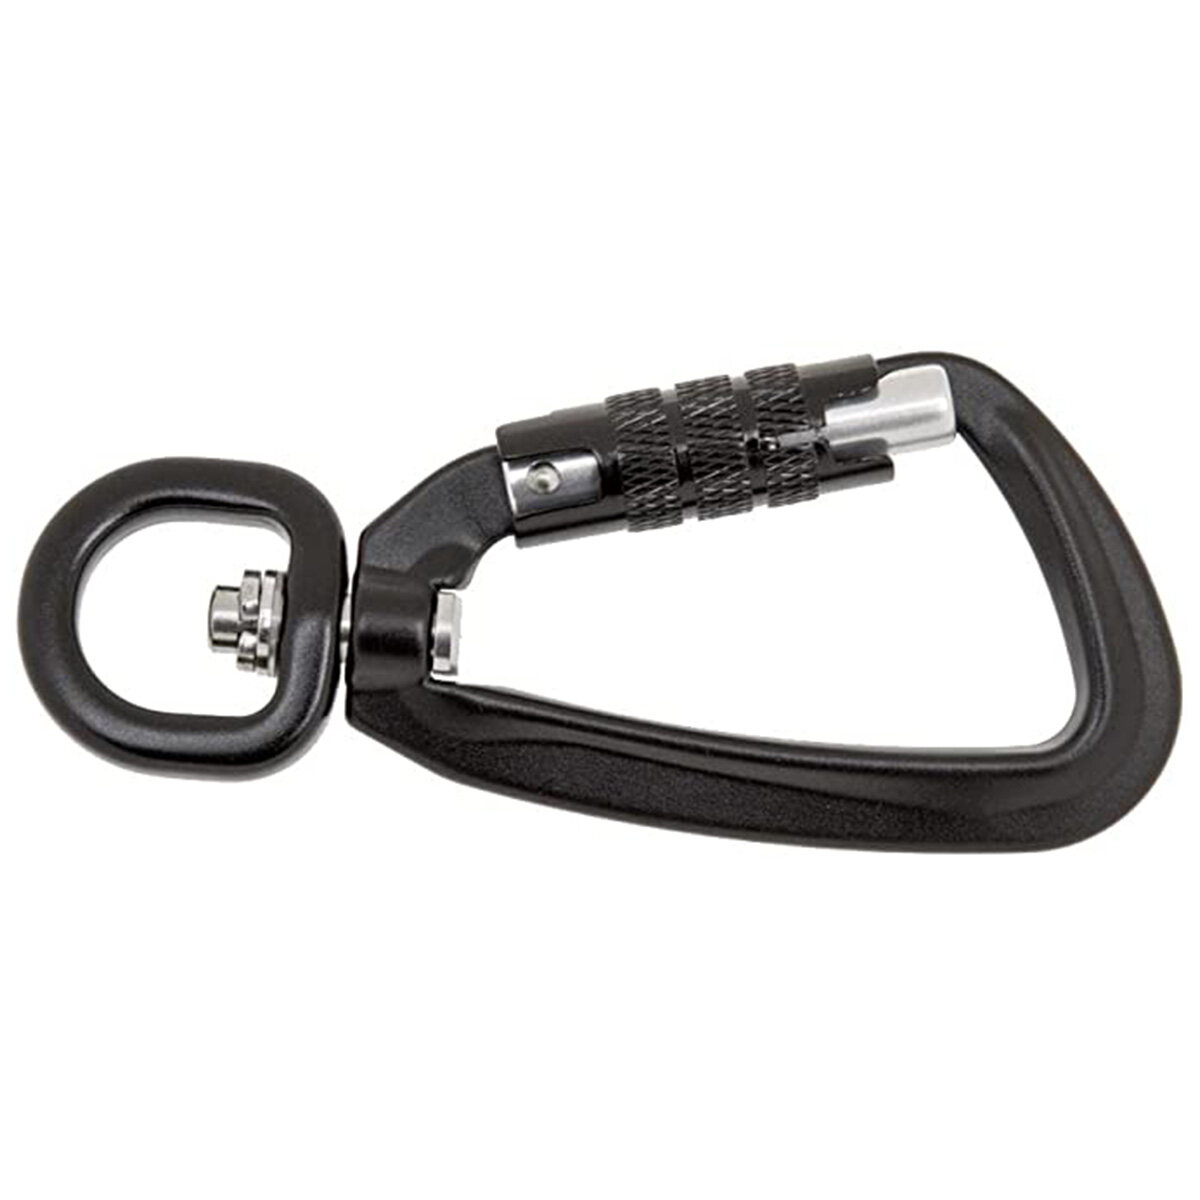 Self Auto Locking Carabiner Heavy Duty Swivel Eye Screwgate Quickdraw Keychain Buckle Dog Leash Hook